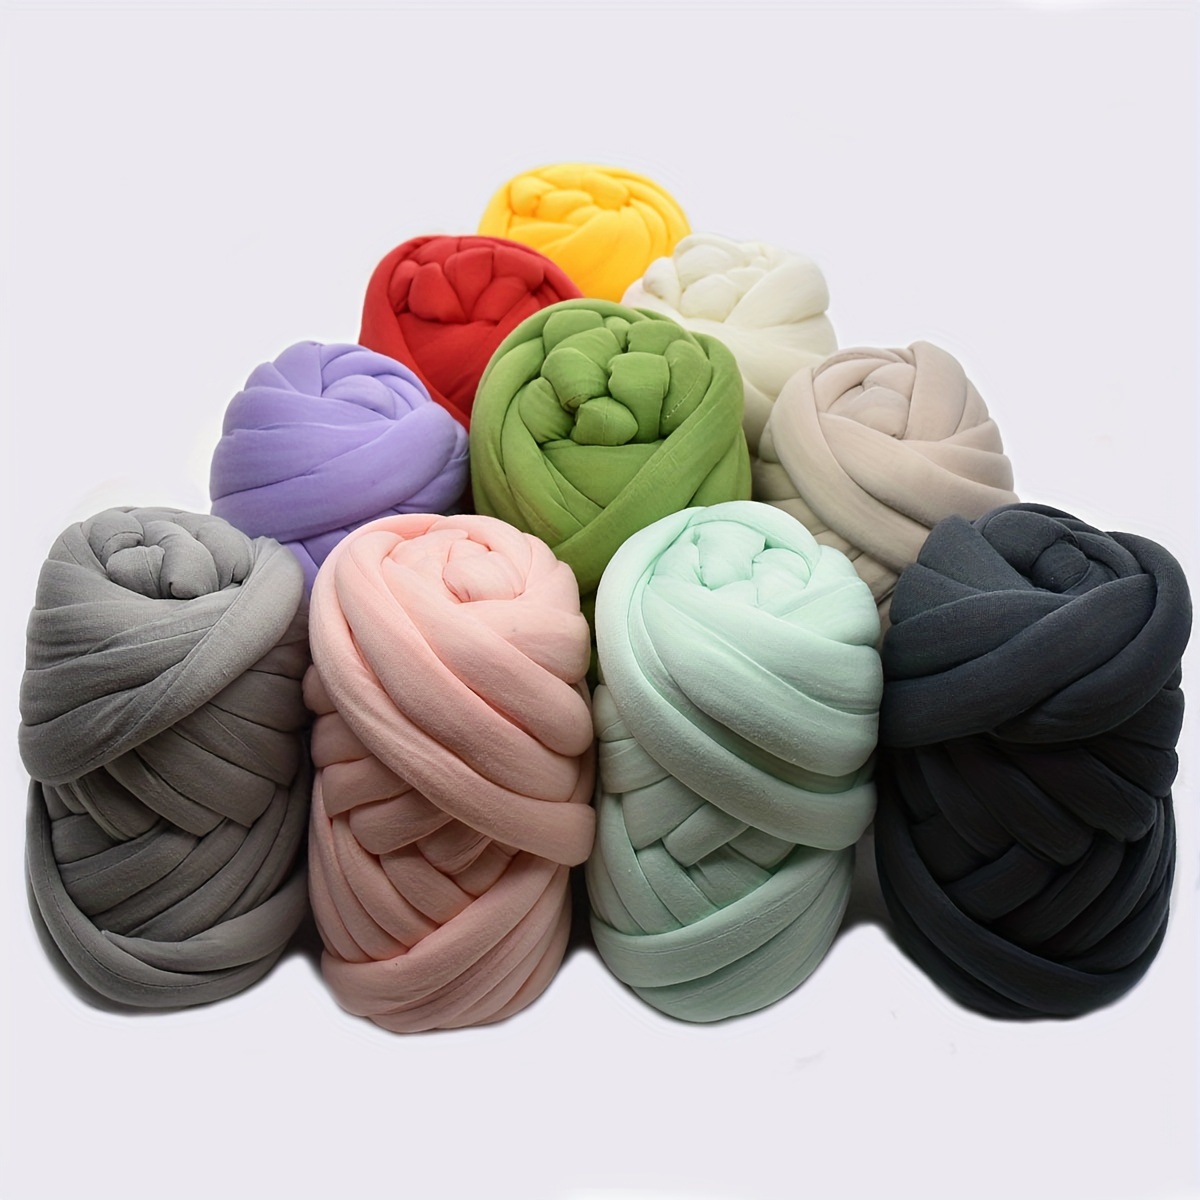 Chunky, Bulky & Super Thick Cotton Knitting & Crochet Yarn